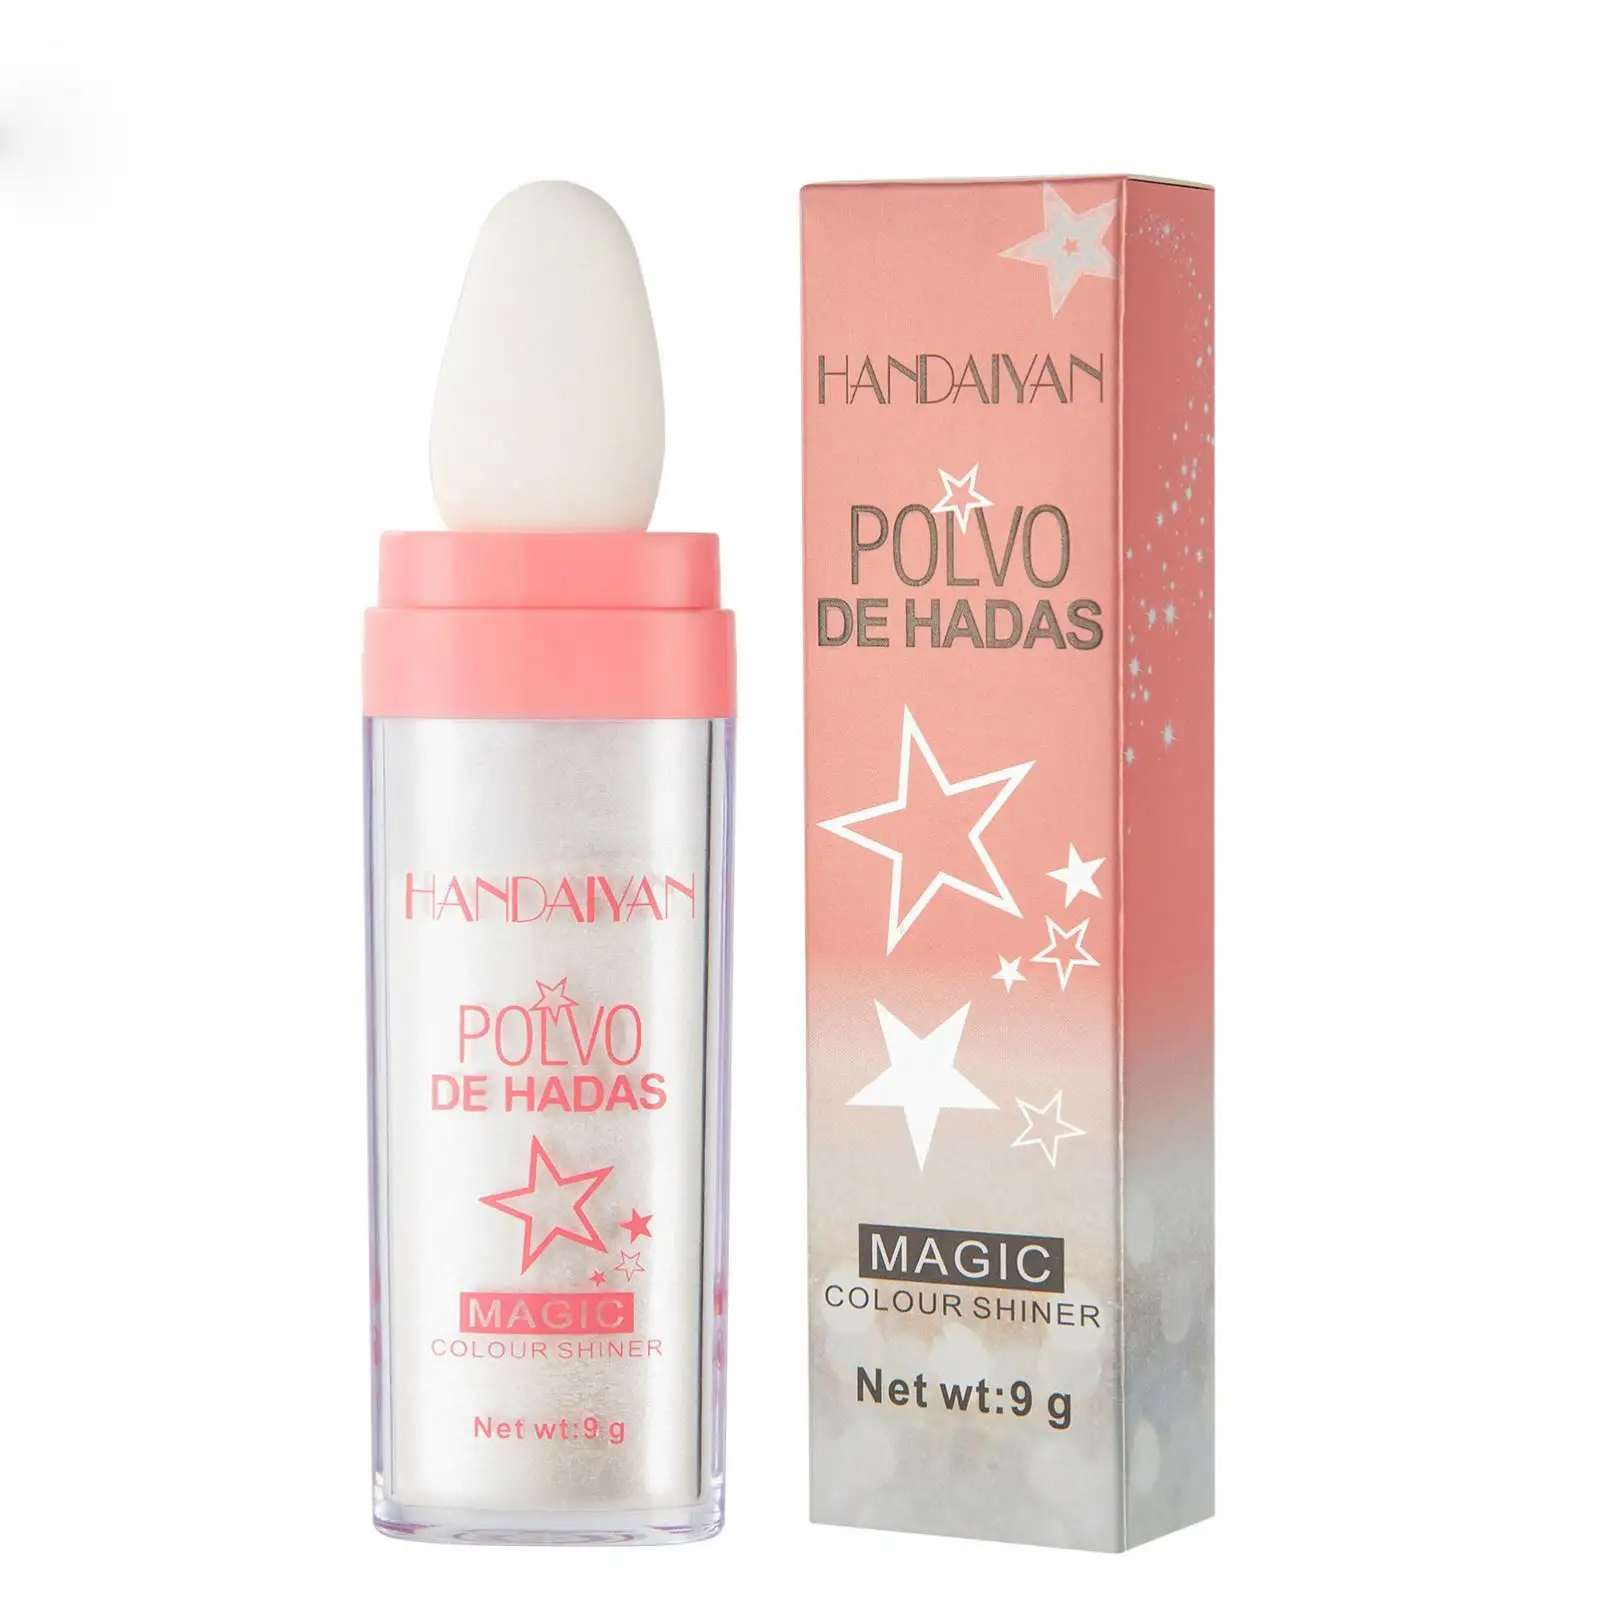 HANDAIYAN Pink Highlight Makeup Shiner Face And Body Loose Highlighter Powder Private Label